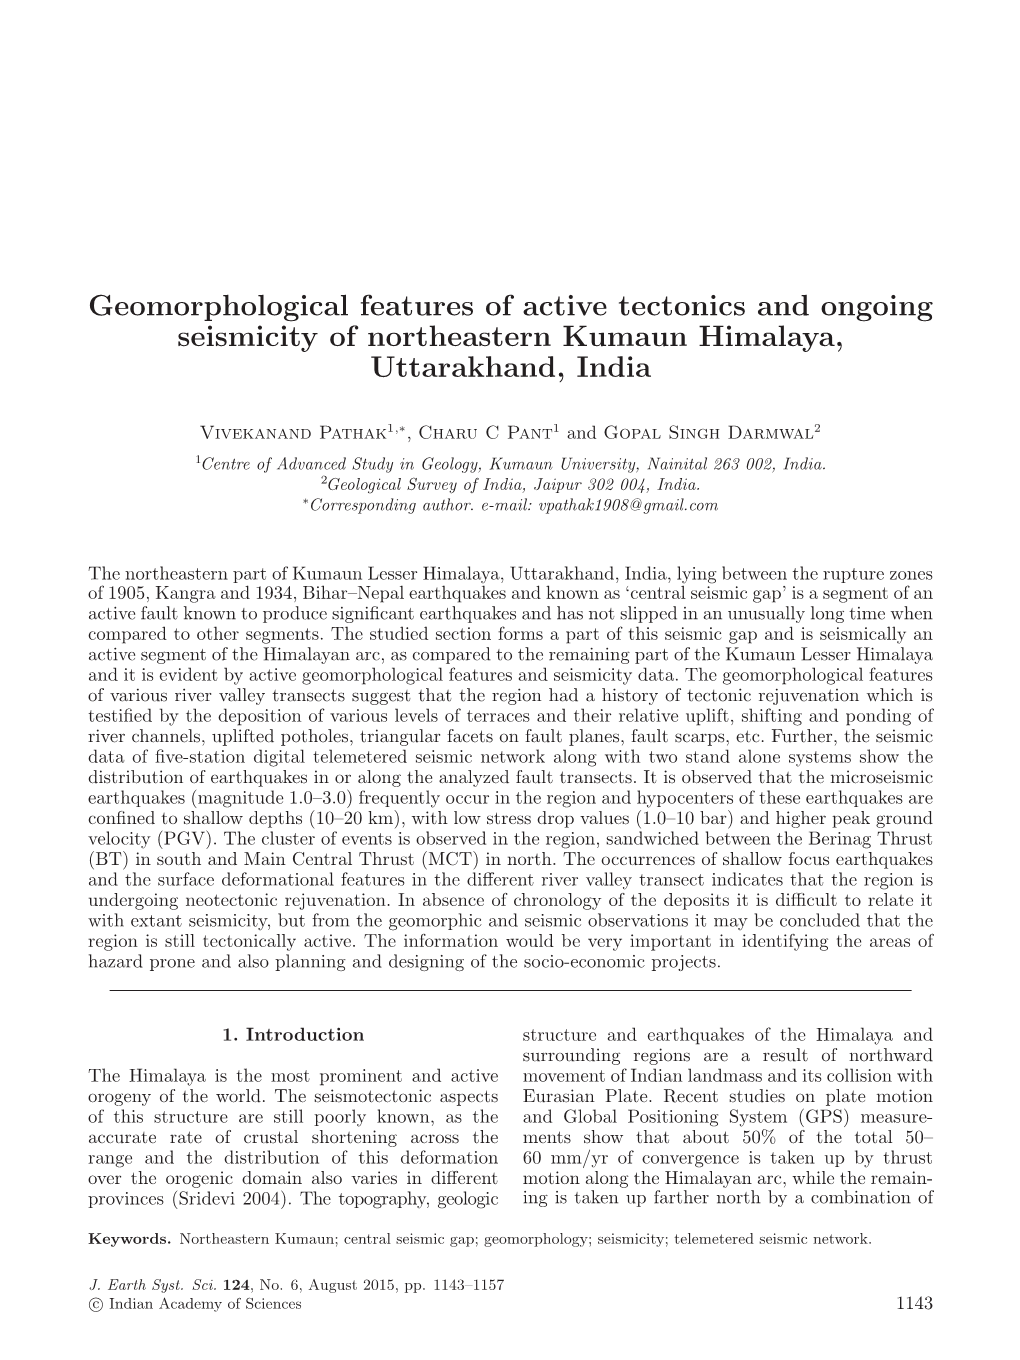 Geomorphological Features of Active Tectonics and Ongoing Seismicity of Northeastern Kumaun Himalaya, Uttarakhand, India